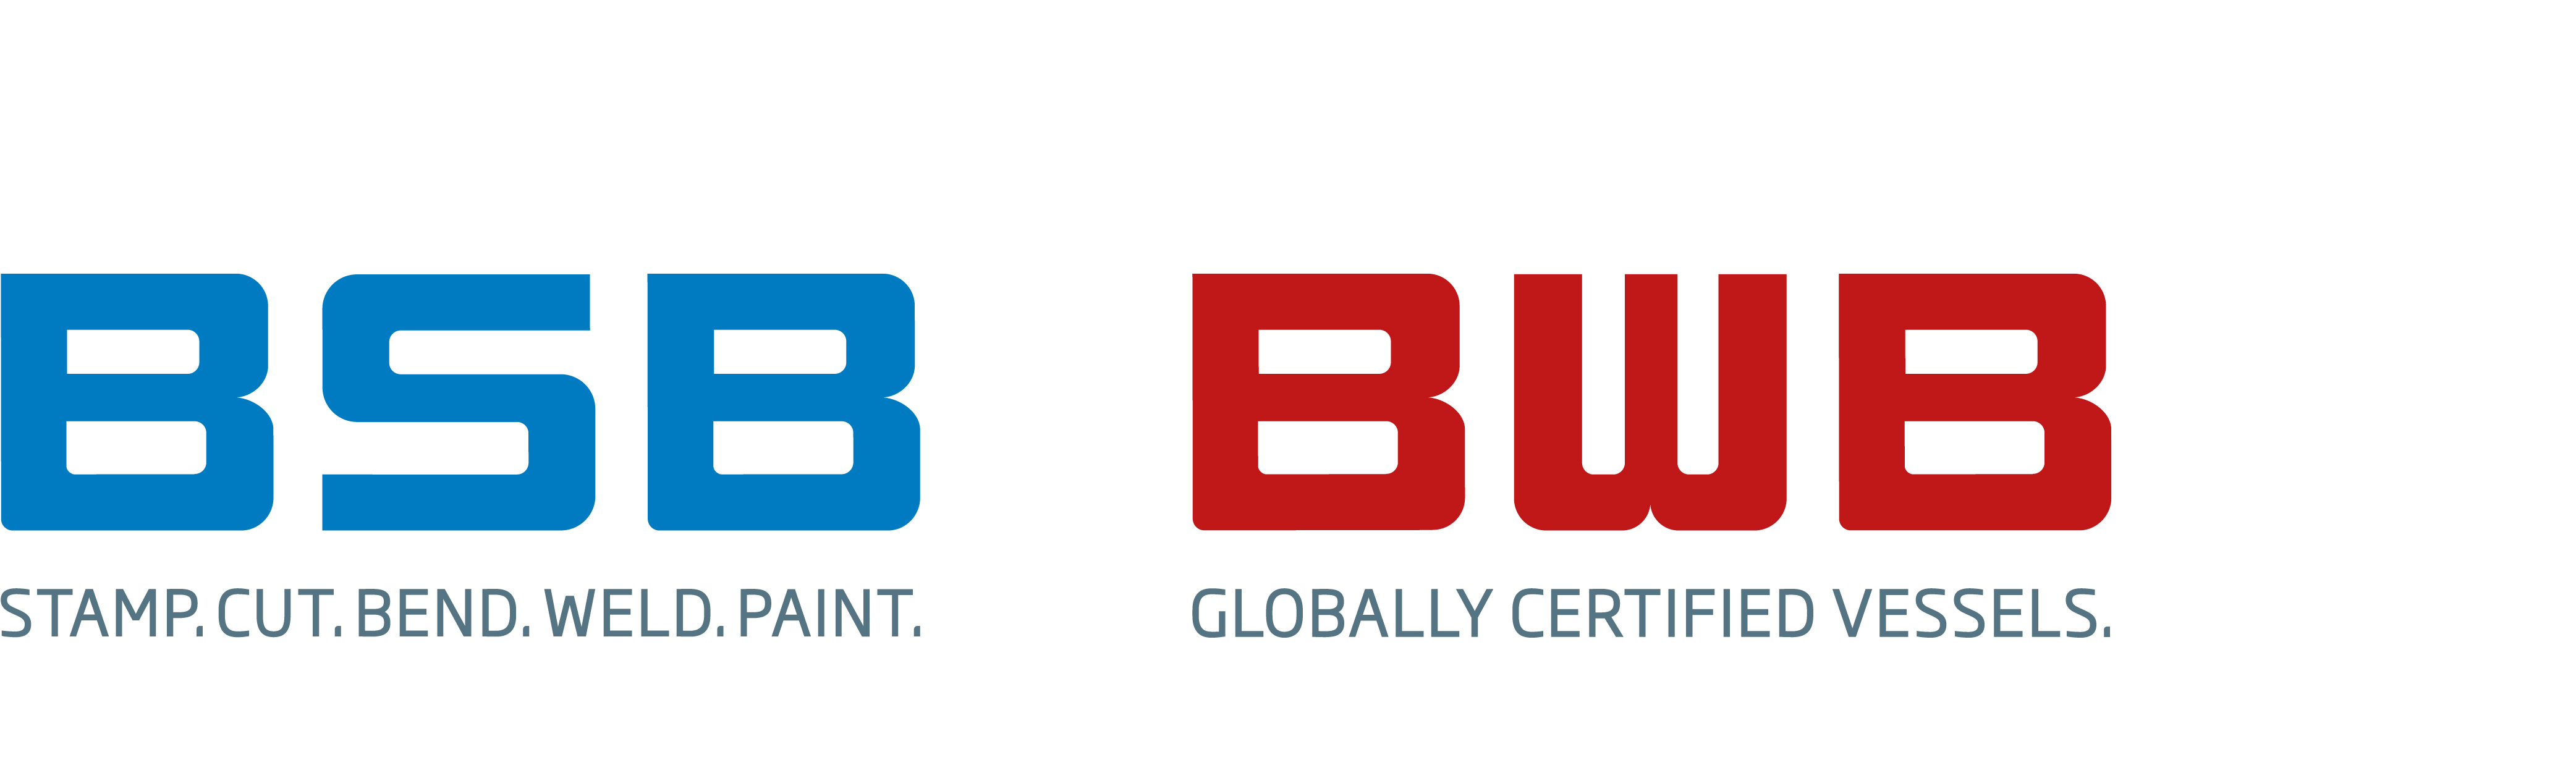 Logo BWB und BWB